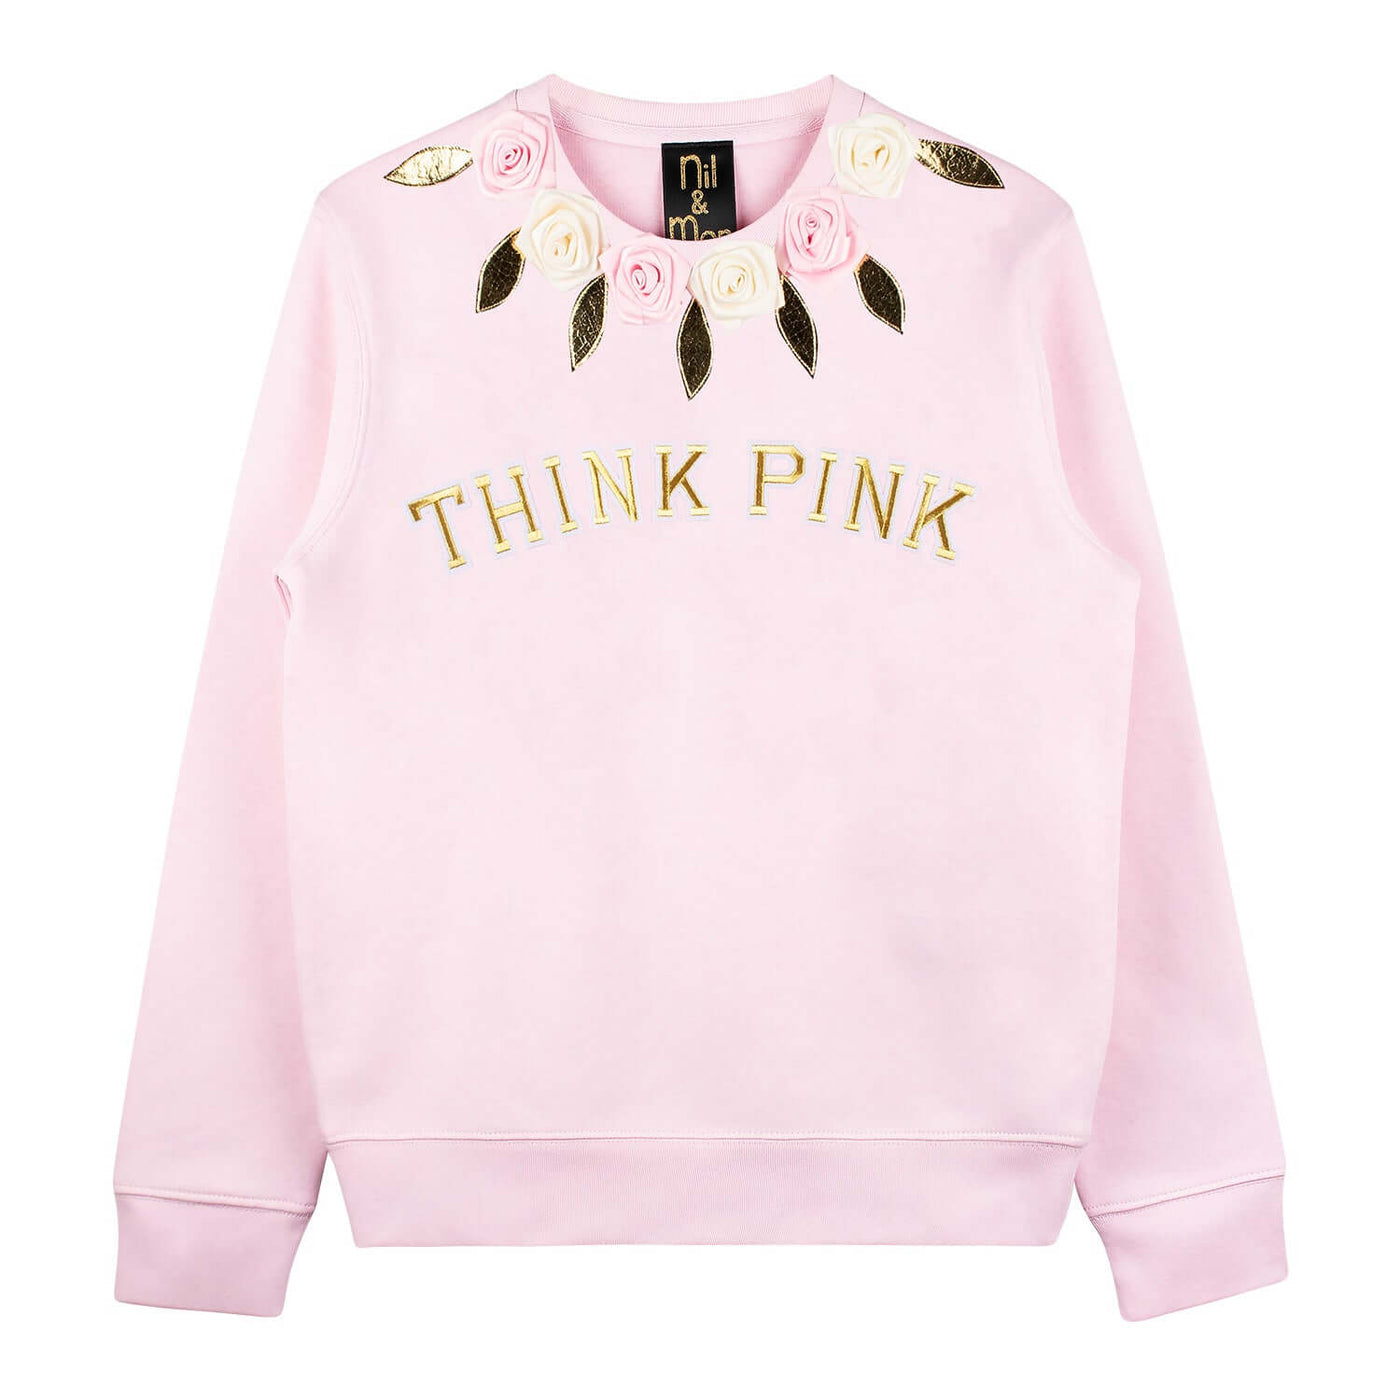 Sweatshirt "Think Pink" - light pink